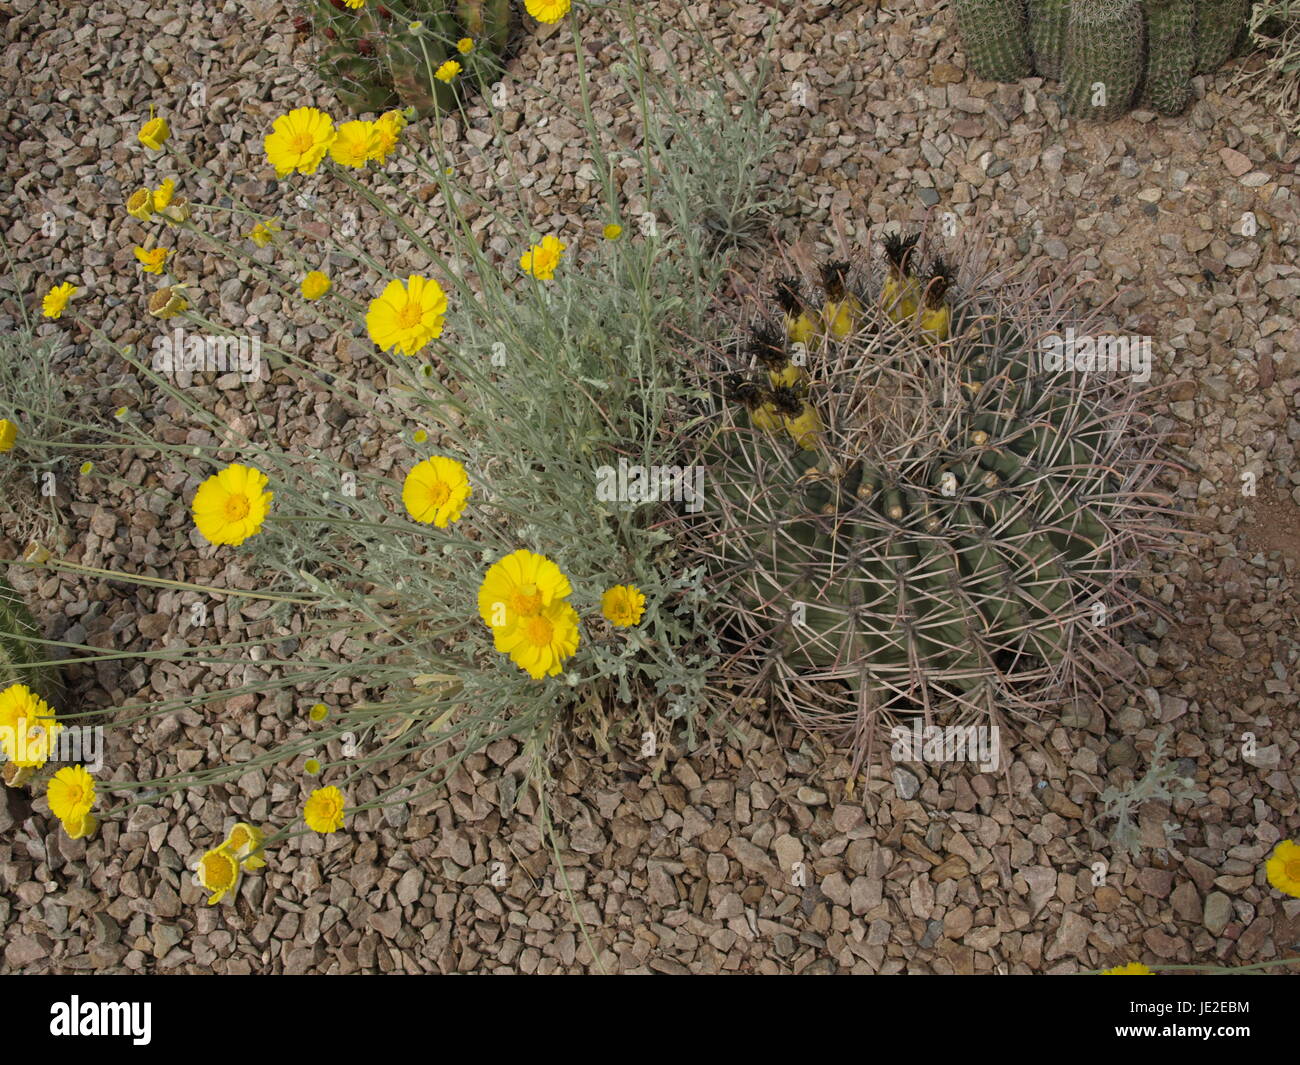 Yellow Flower on spherical cactus Stock Photo